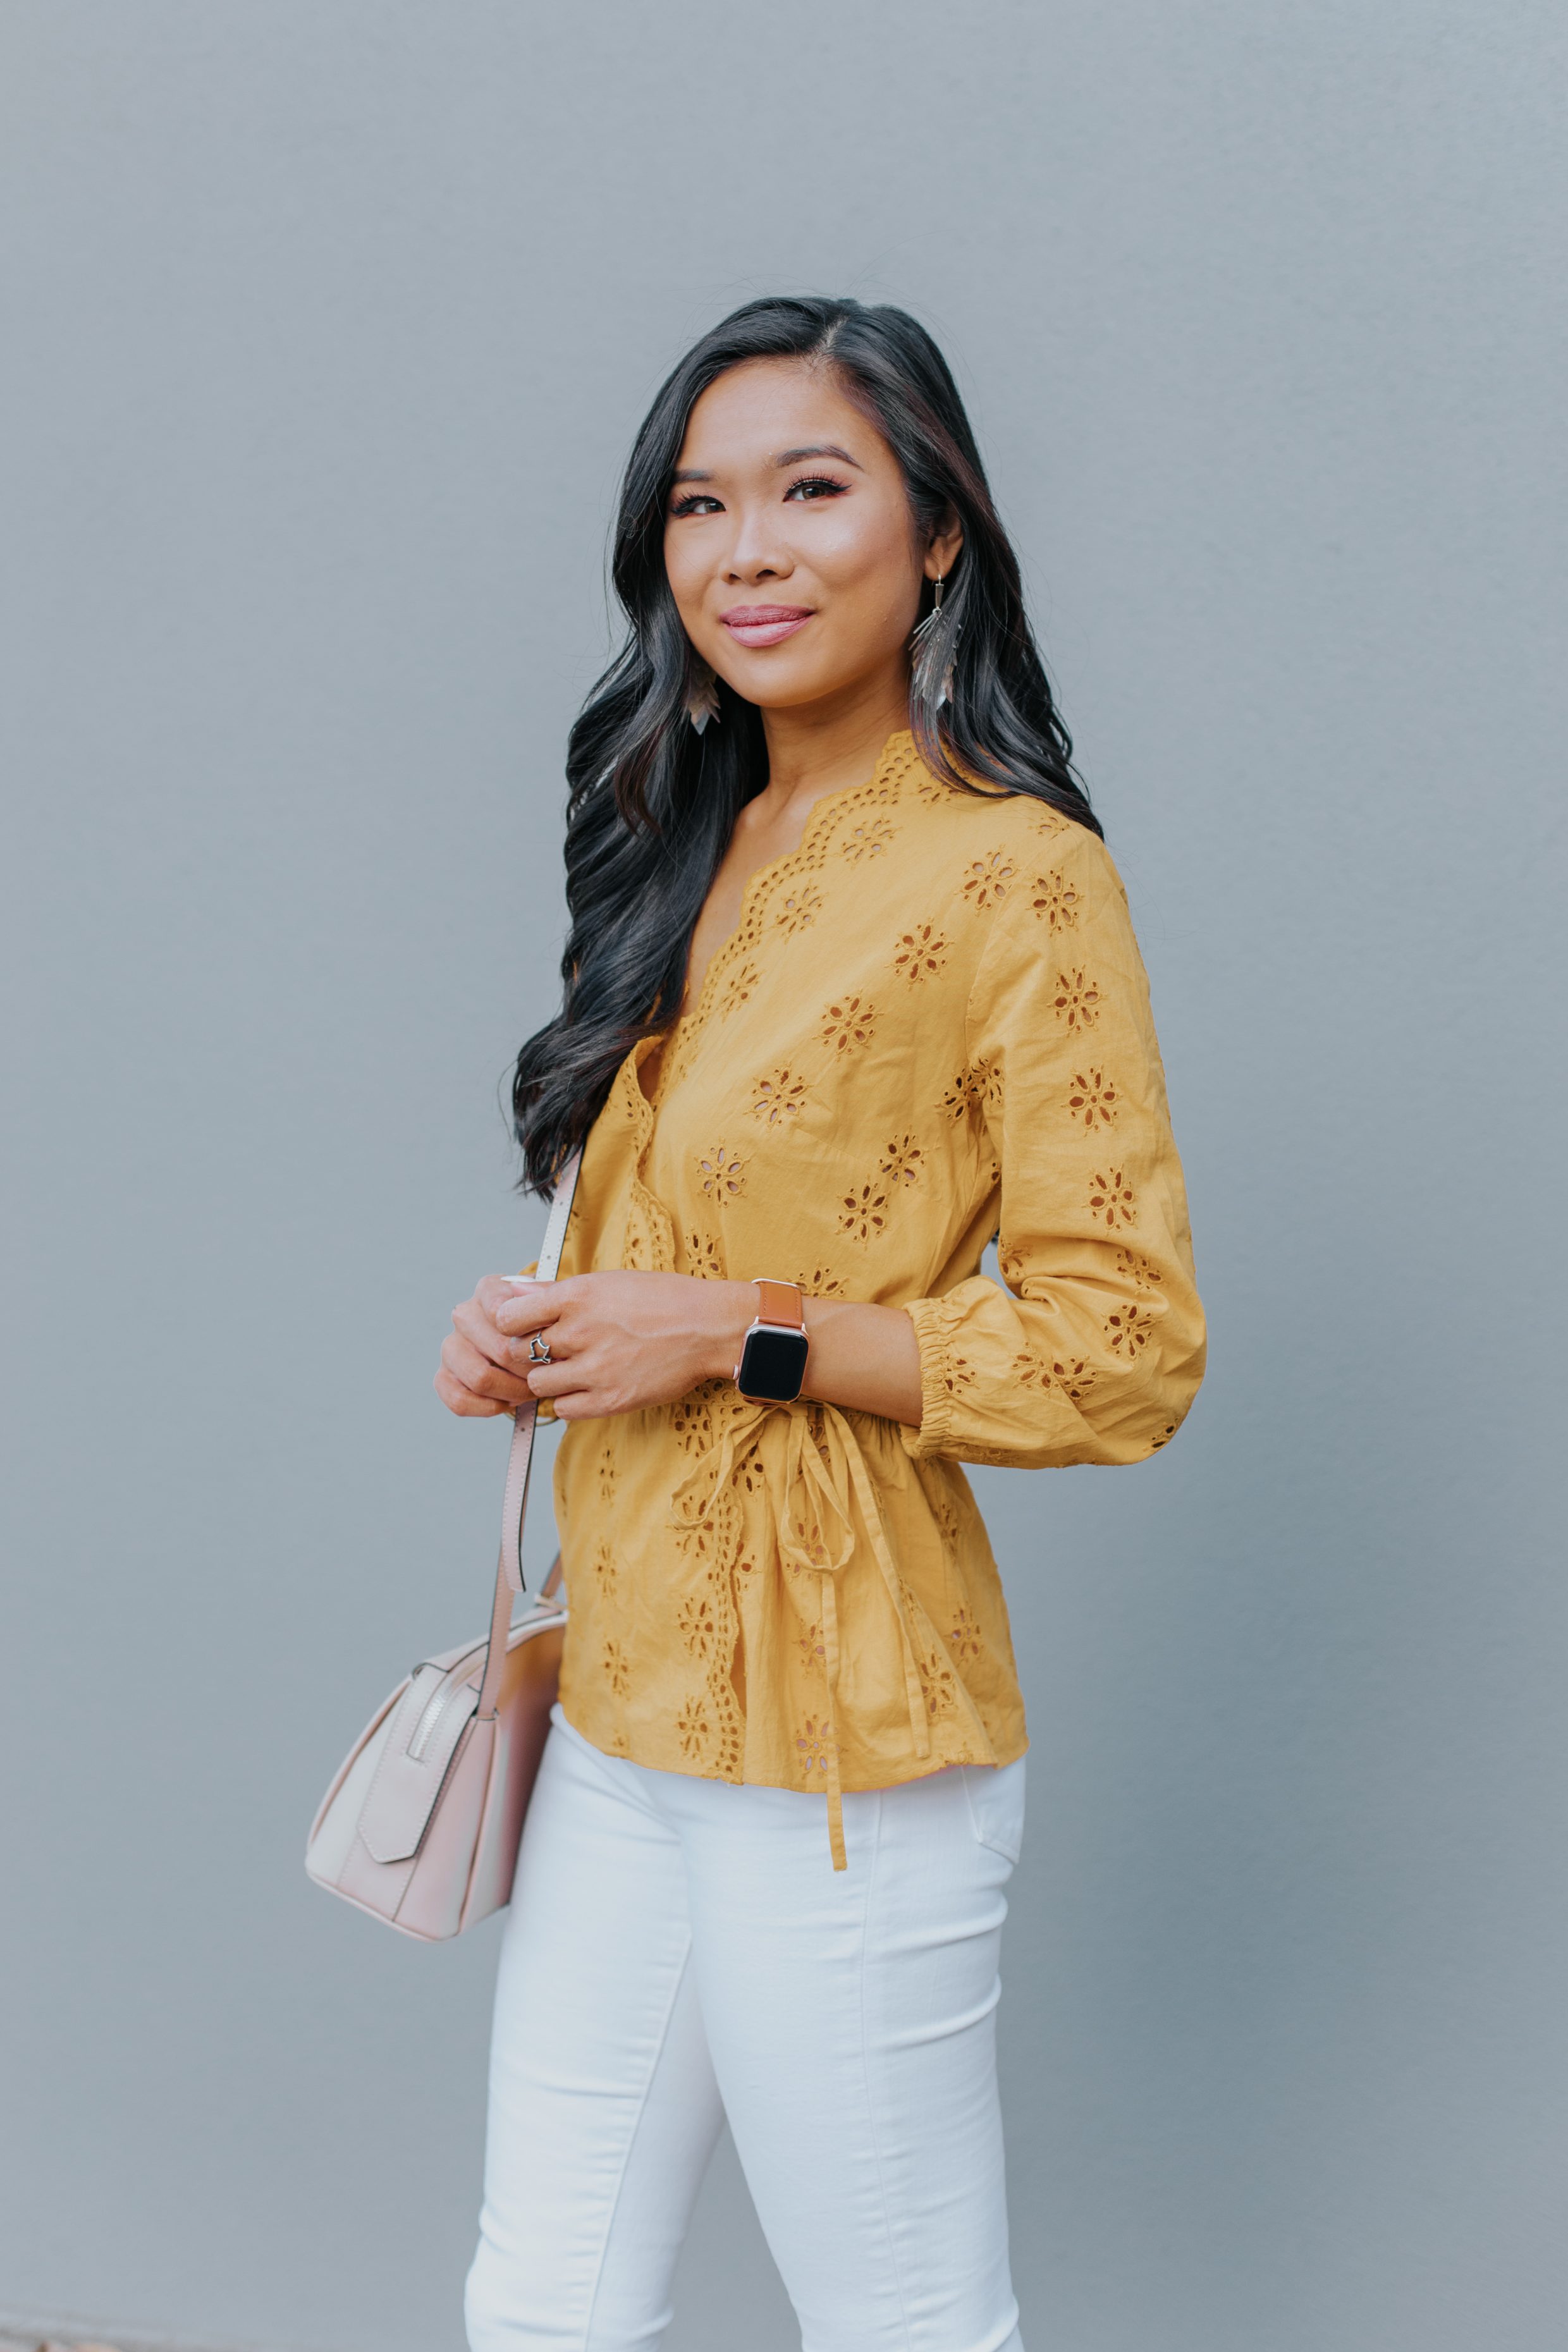 Asian woman wears a gold eyelet blouse